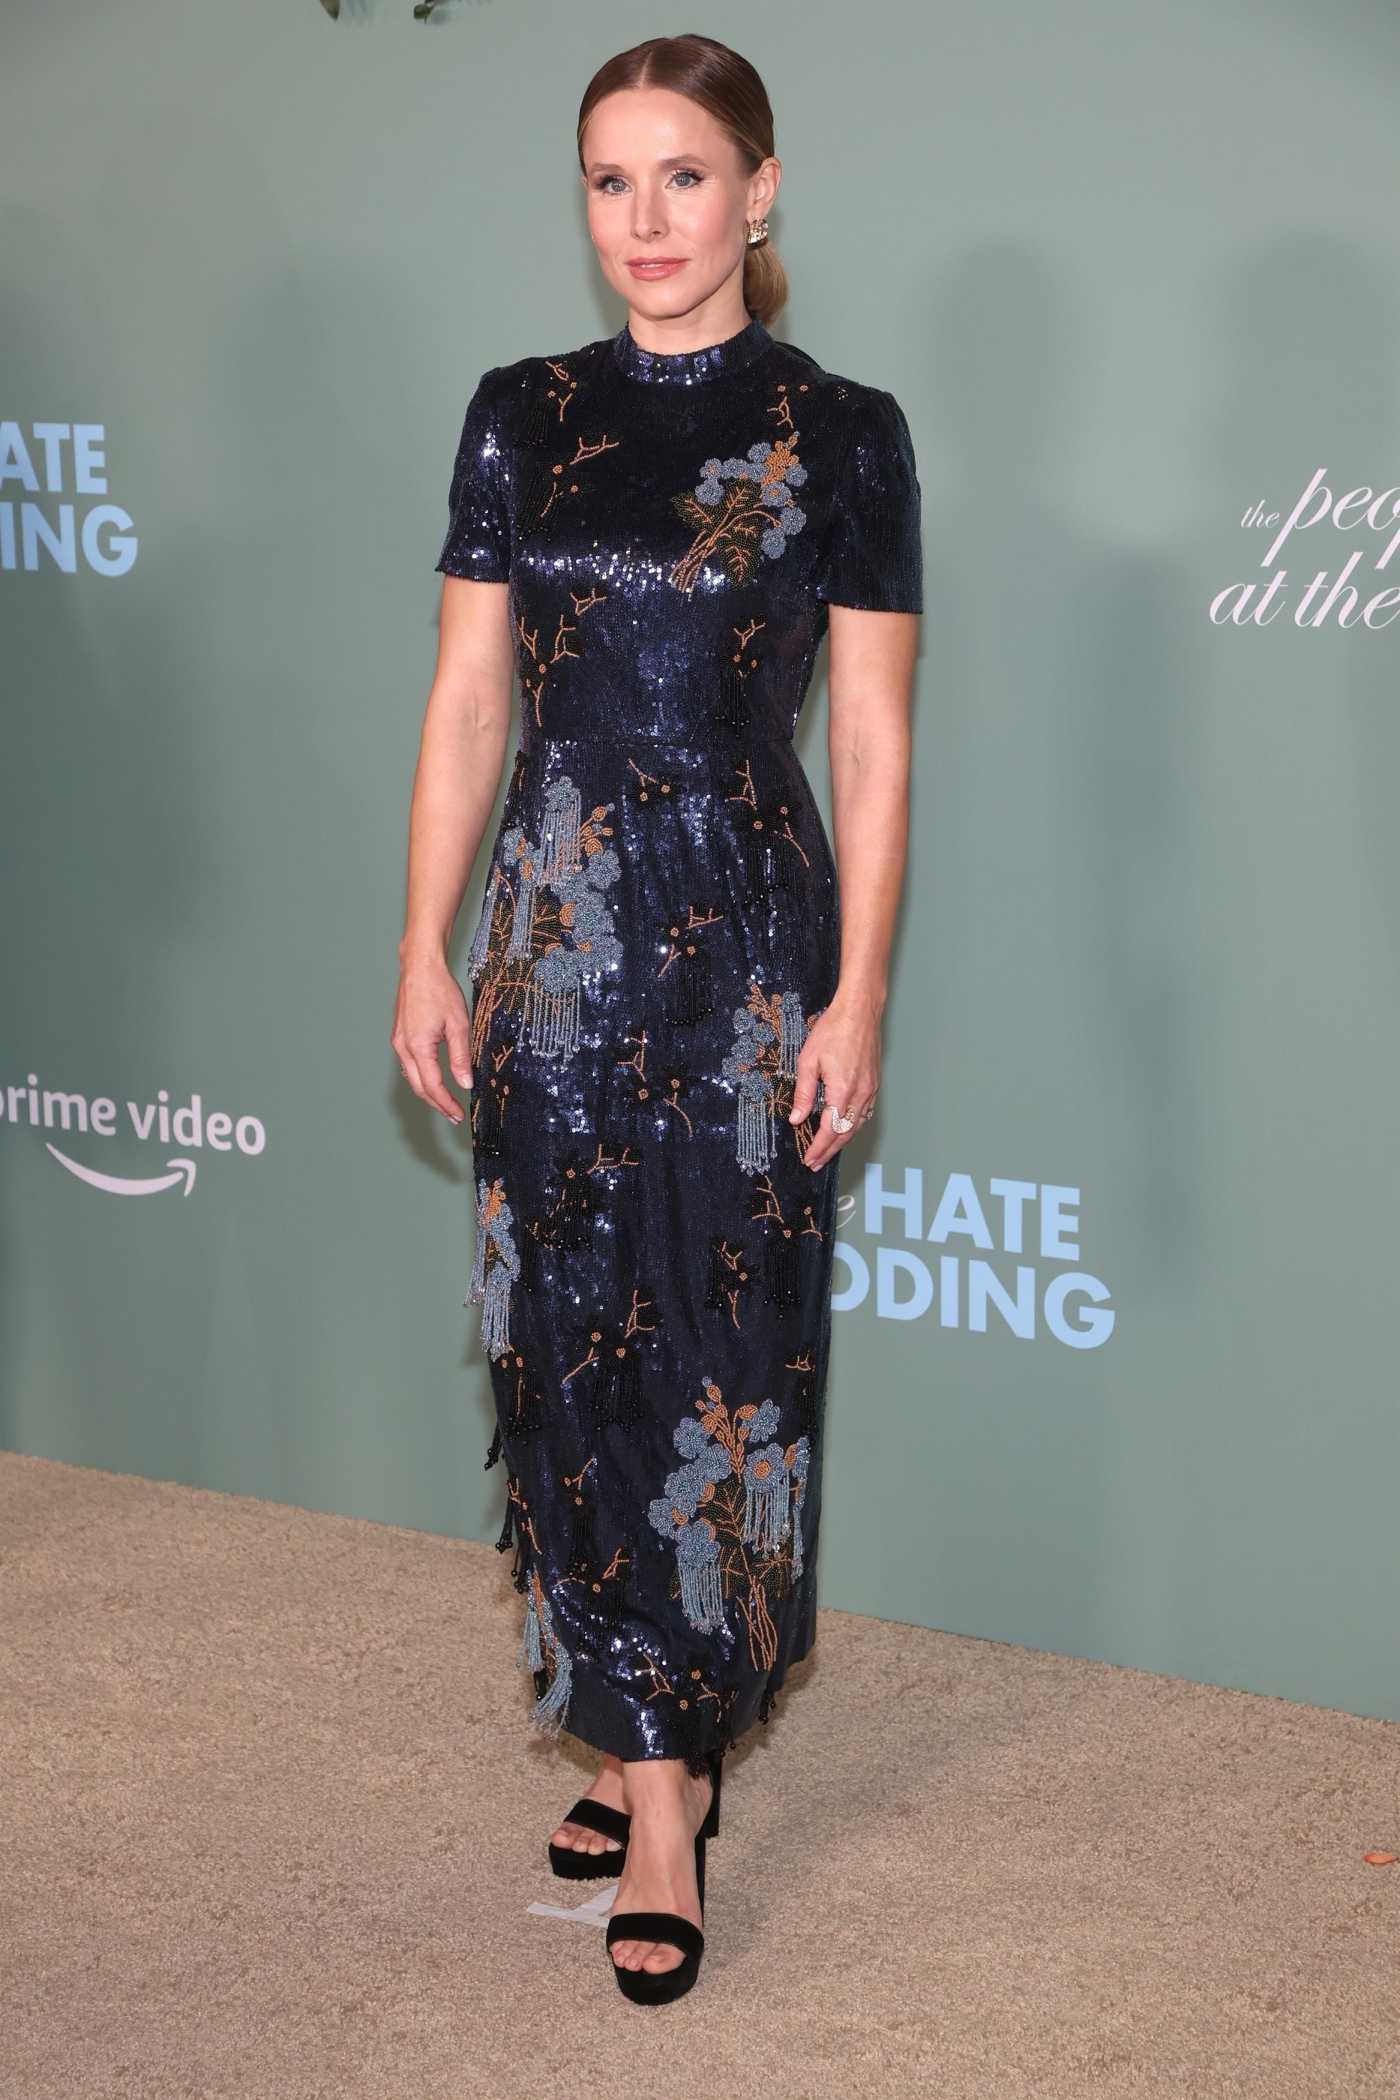 Kristen Bell Attends The People We Hate Premiere in Los Angeles 11/16/2022